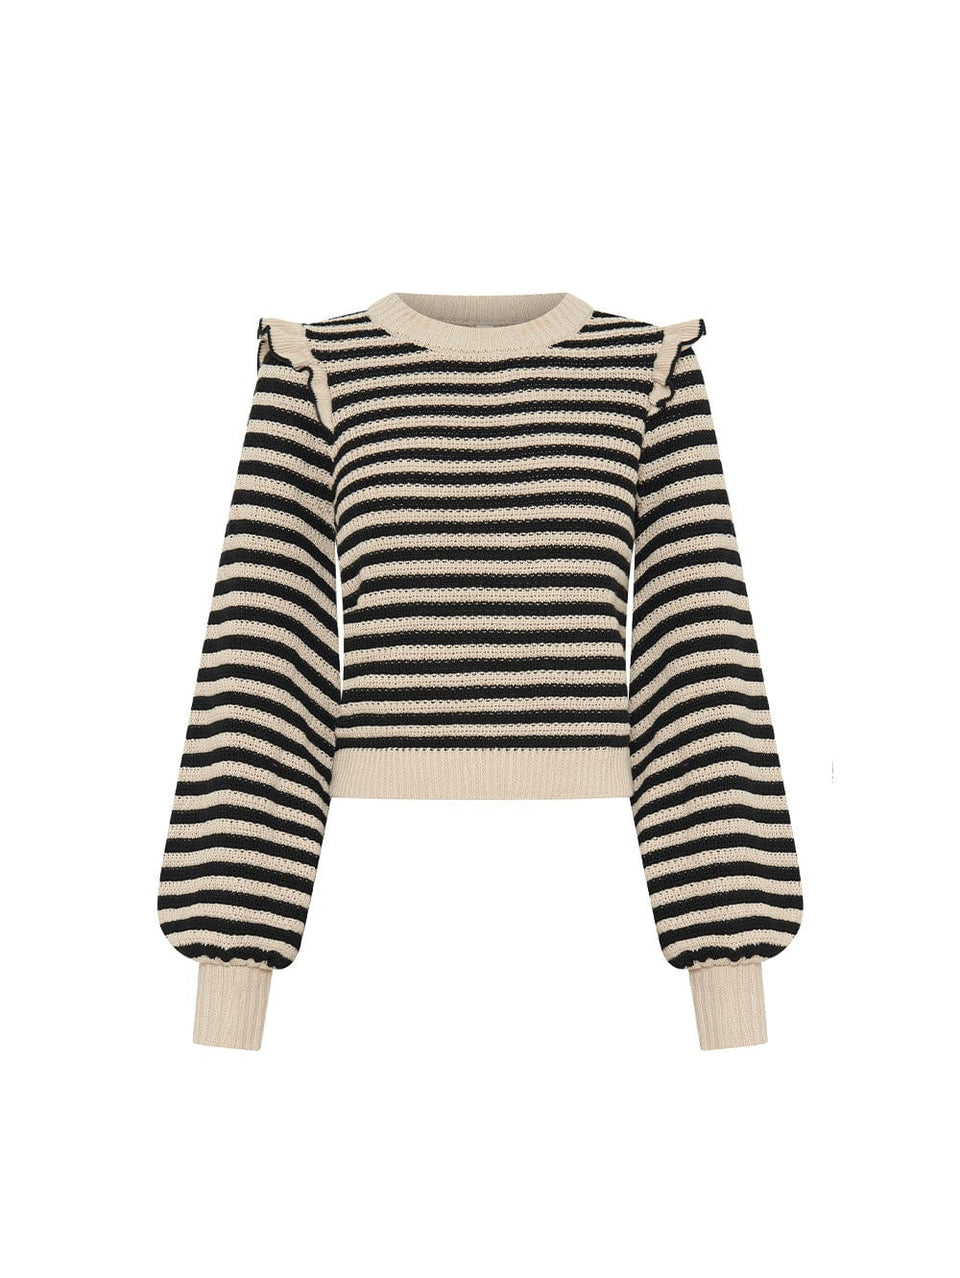 Anita Knit Top KIVARI | Black and white striped knit jumper